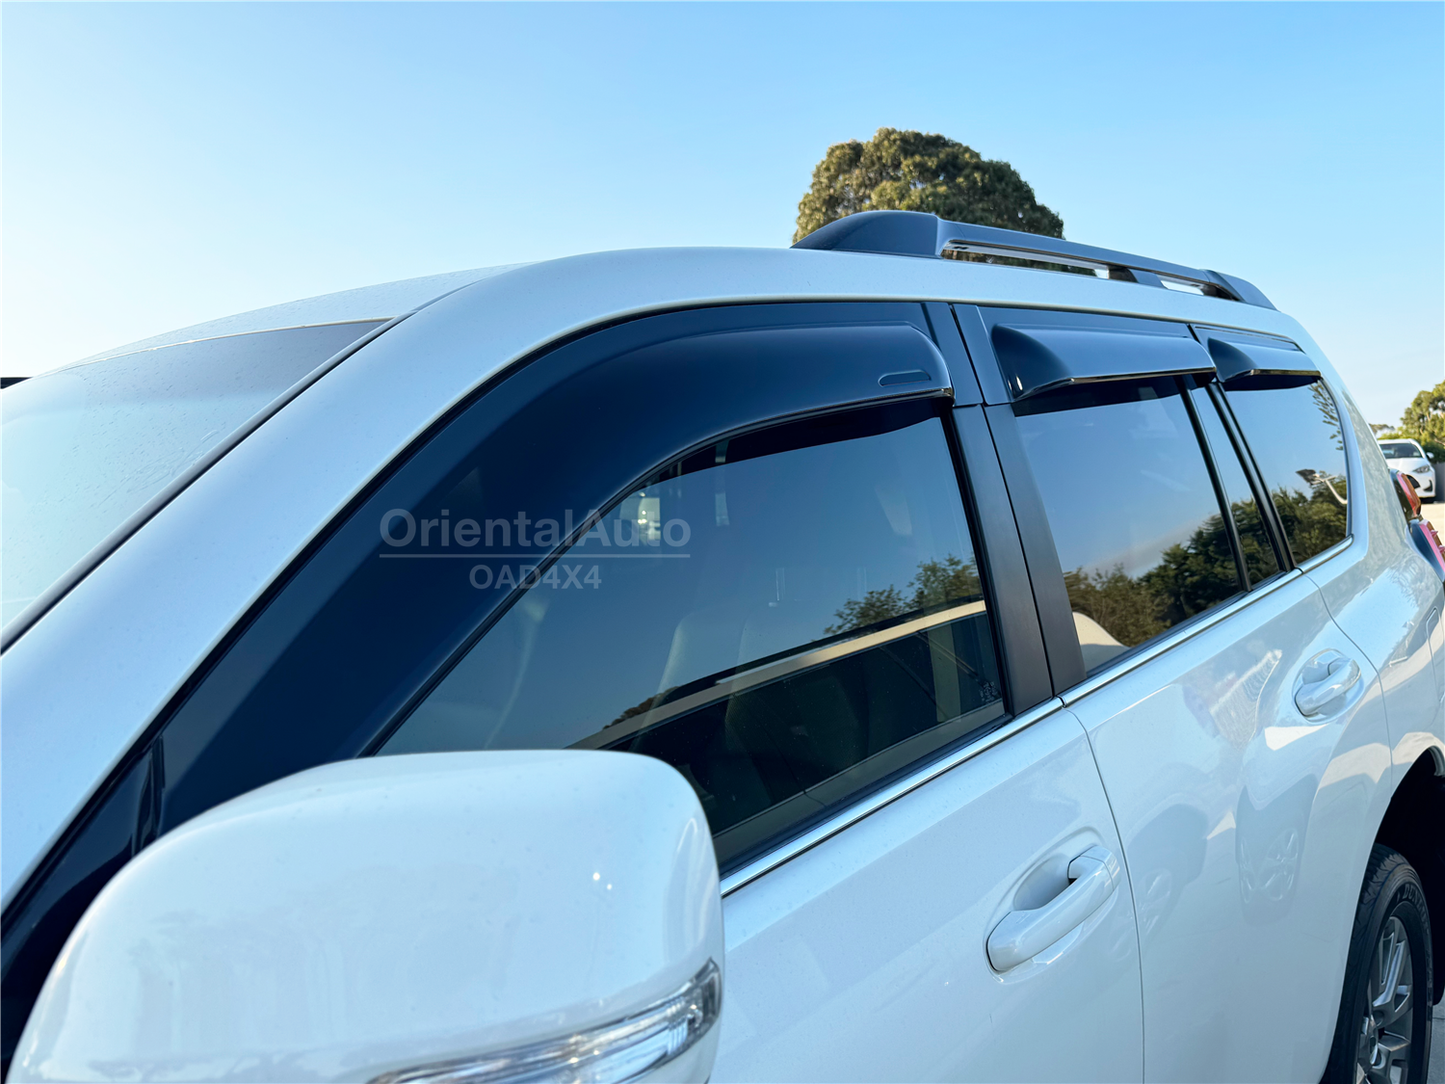 Widened Luxury 6pcs Weathershields For Toyota Land Cruiser Prado 150 2009+ Weather Shields Window Visor for Prado150